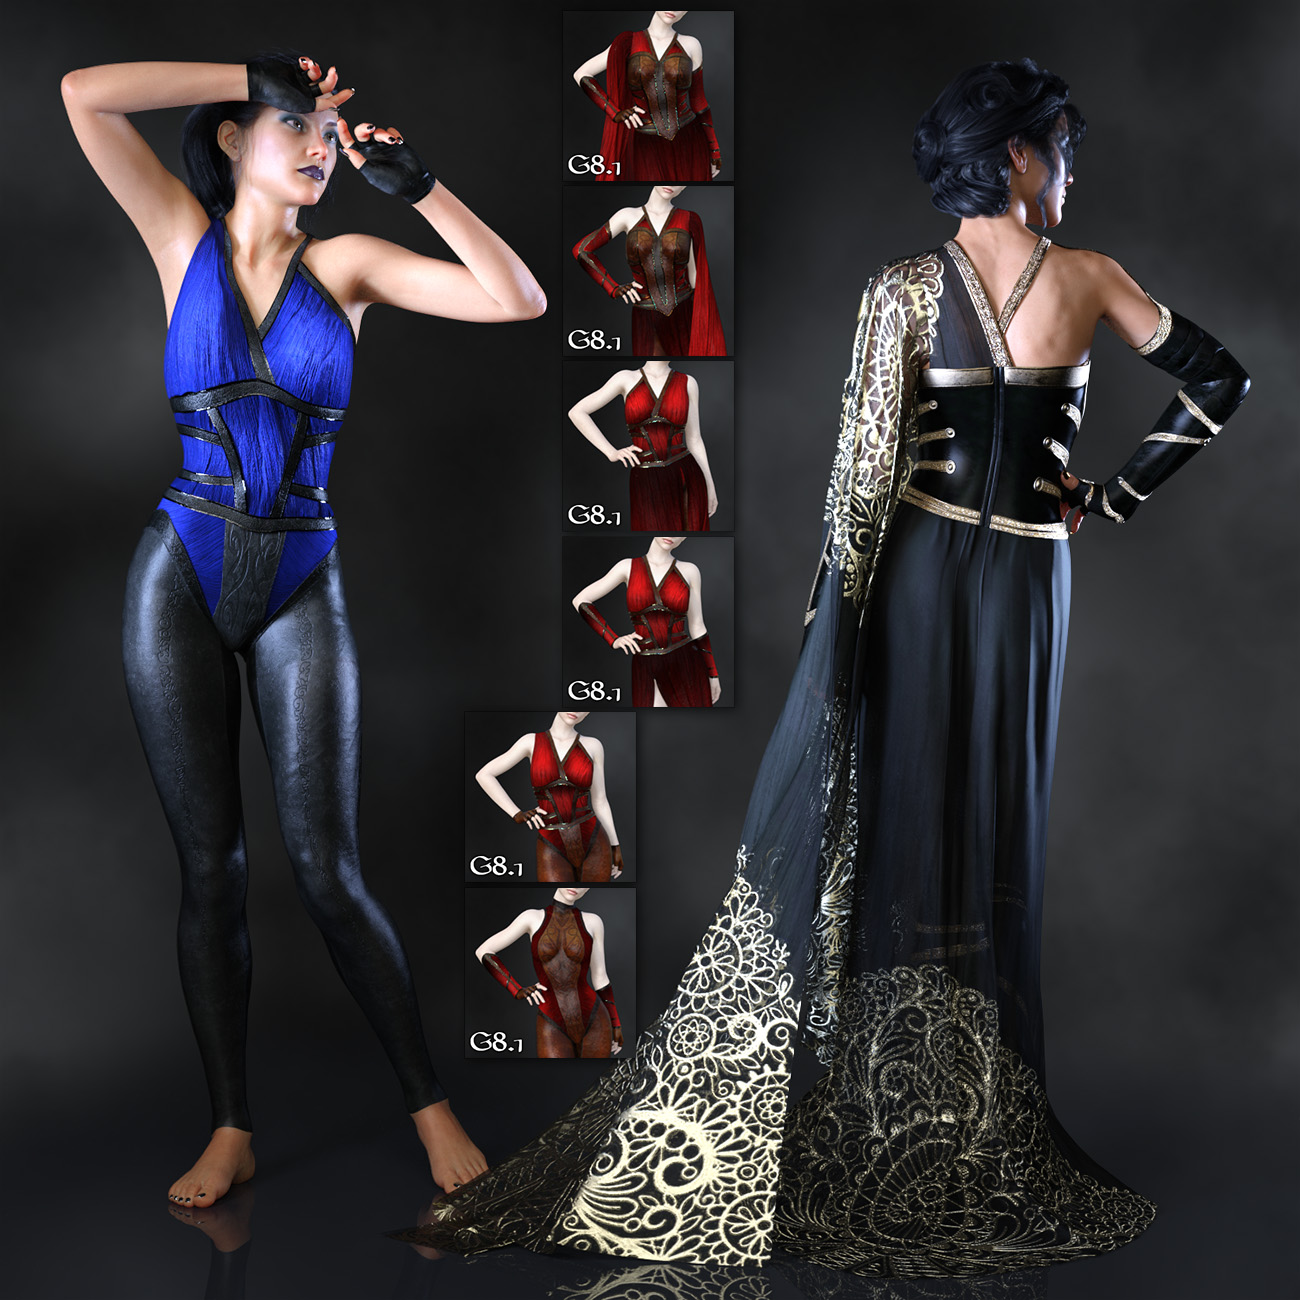 dForce Seraphine Wardrobe for Genesis 8 Female and Genesis 8.1 Female by: ArkiShox-Design, 3D Models by Daz 3D